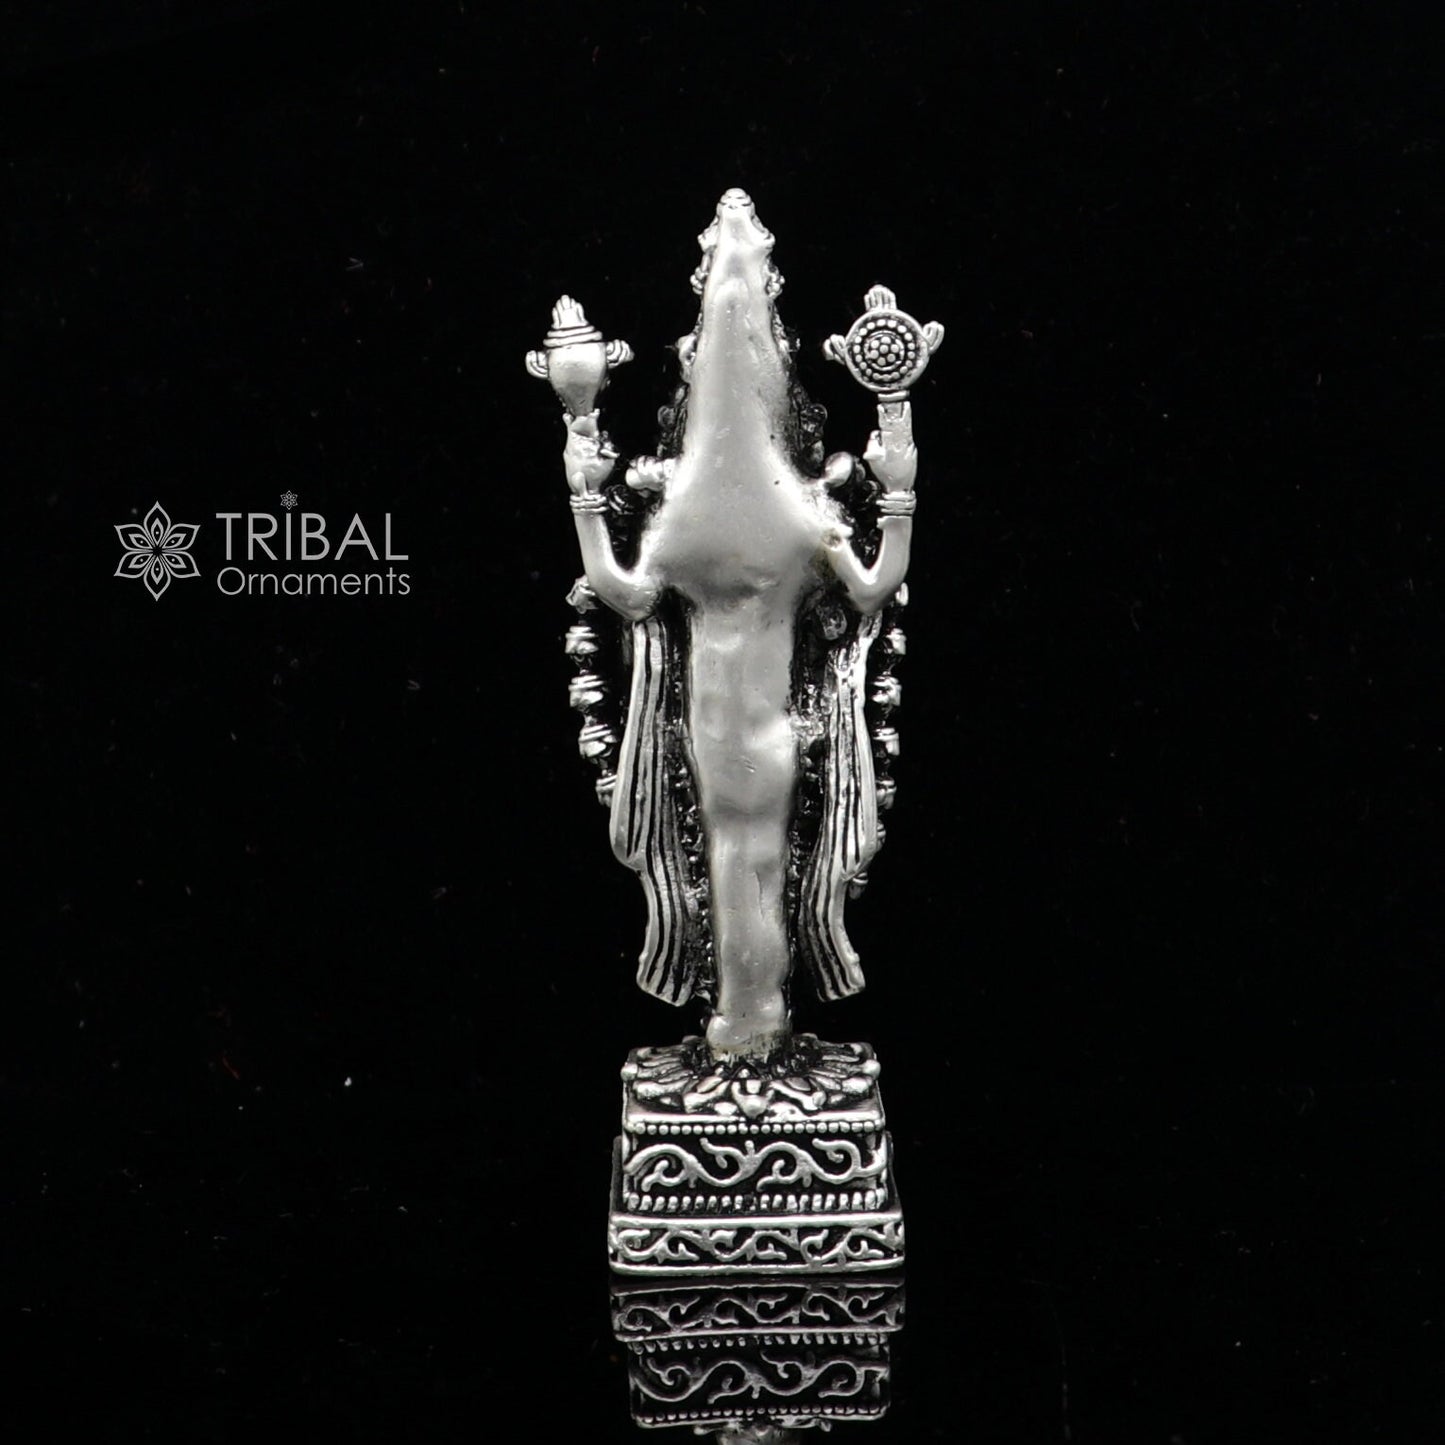 3" 925 sterling silver stylish divine venkateswara swamy idol tirupati balaji statue sculpture figurine amazing crafted statue gift art657 - TRIBAL ORNAMENTS